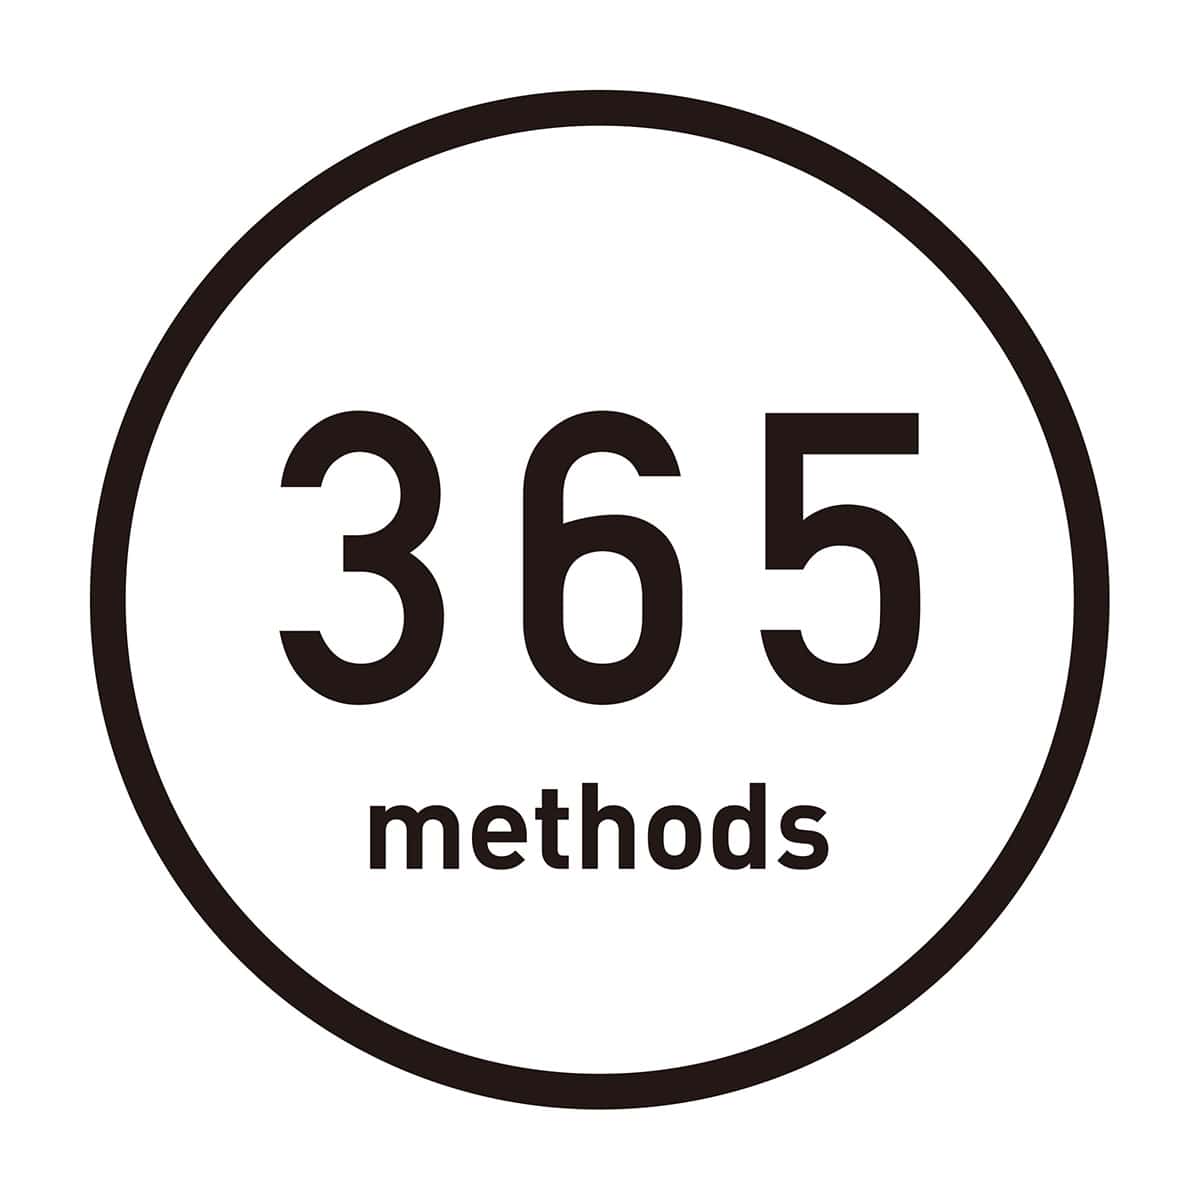 【365methods】キャセロール20cm